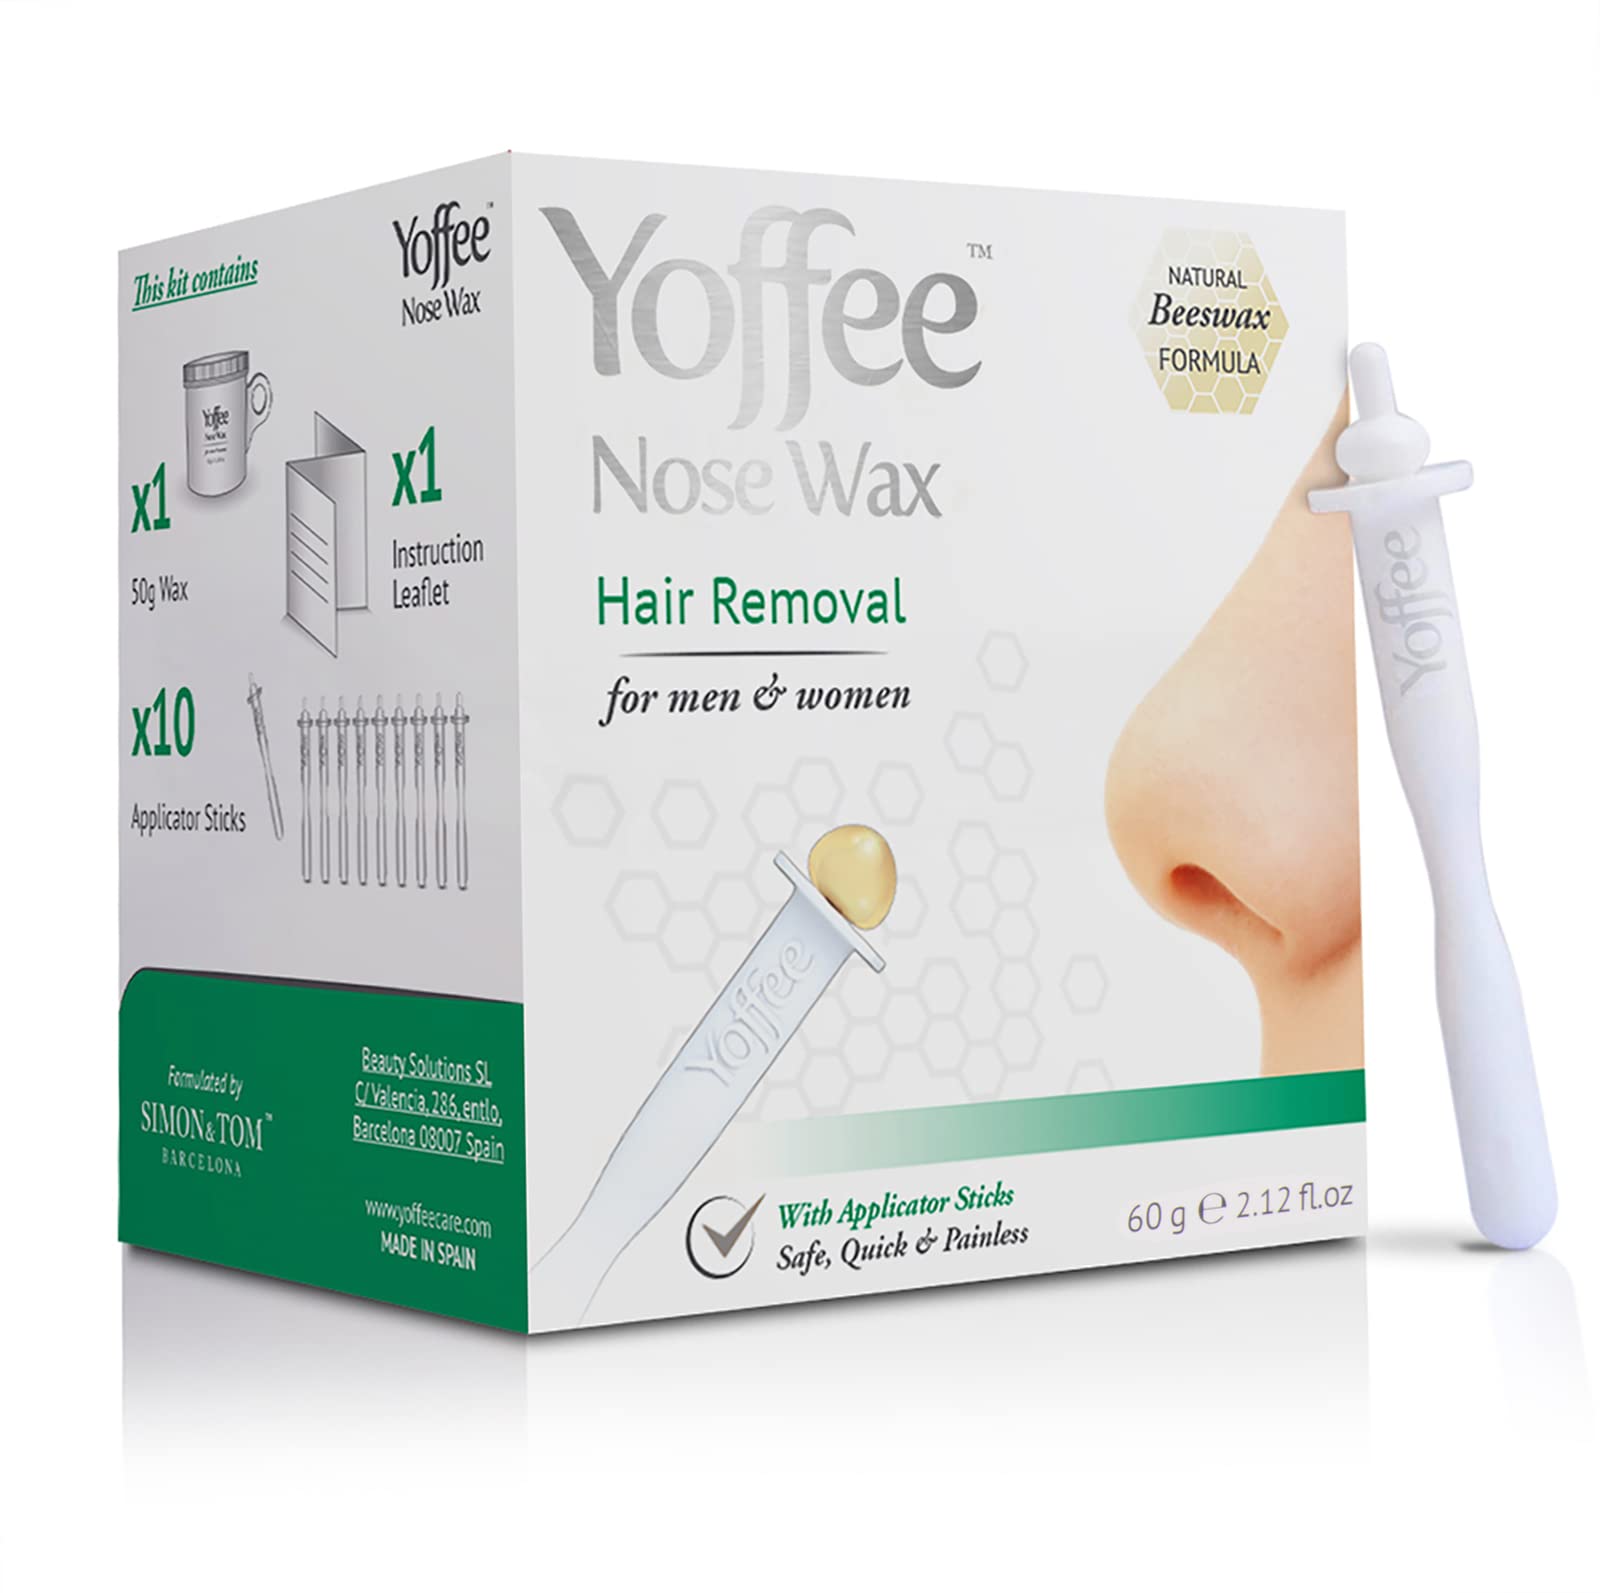 Original Yoffee Nose Wax Kit- Nose Waxing Kit for Men & Women - Nose Hair  Wax with